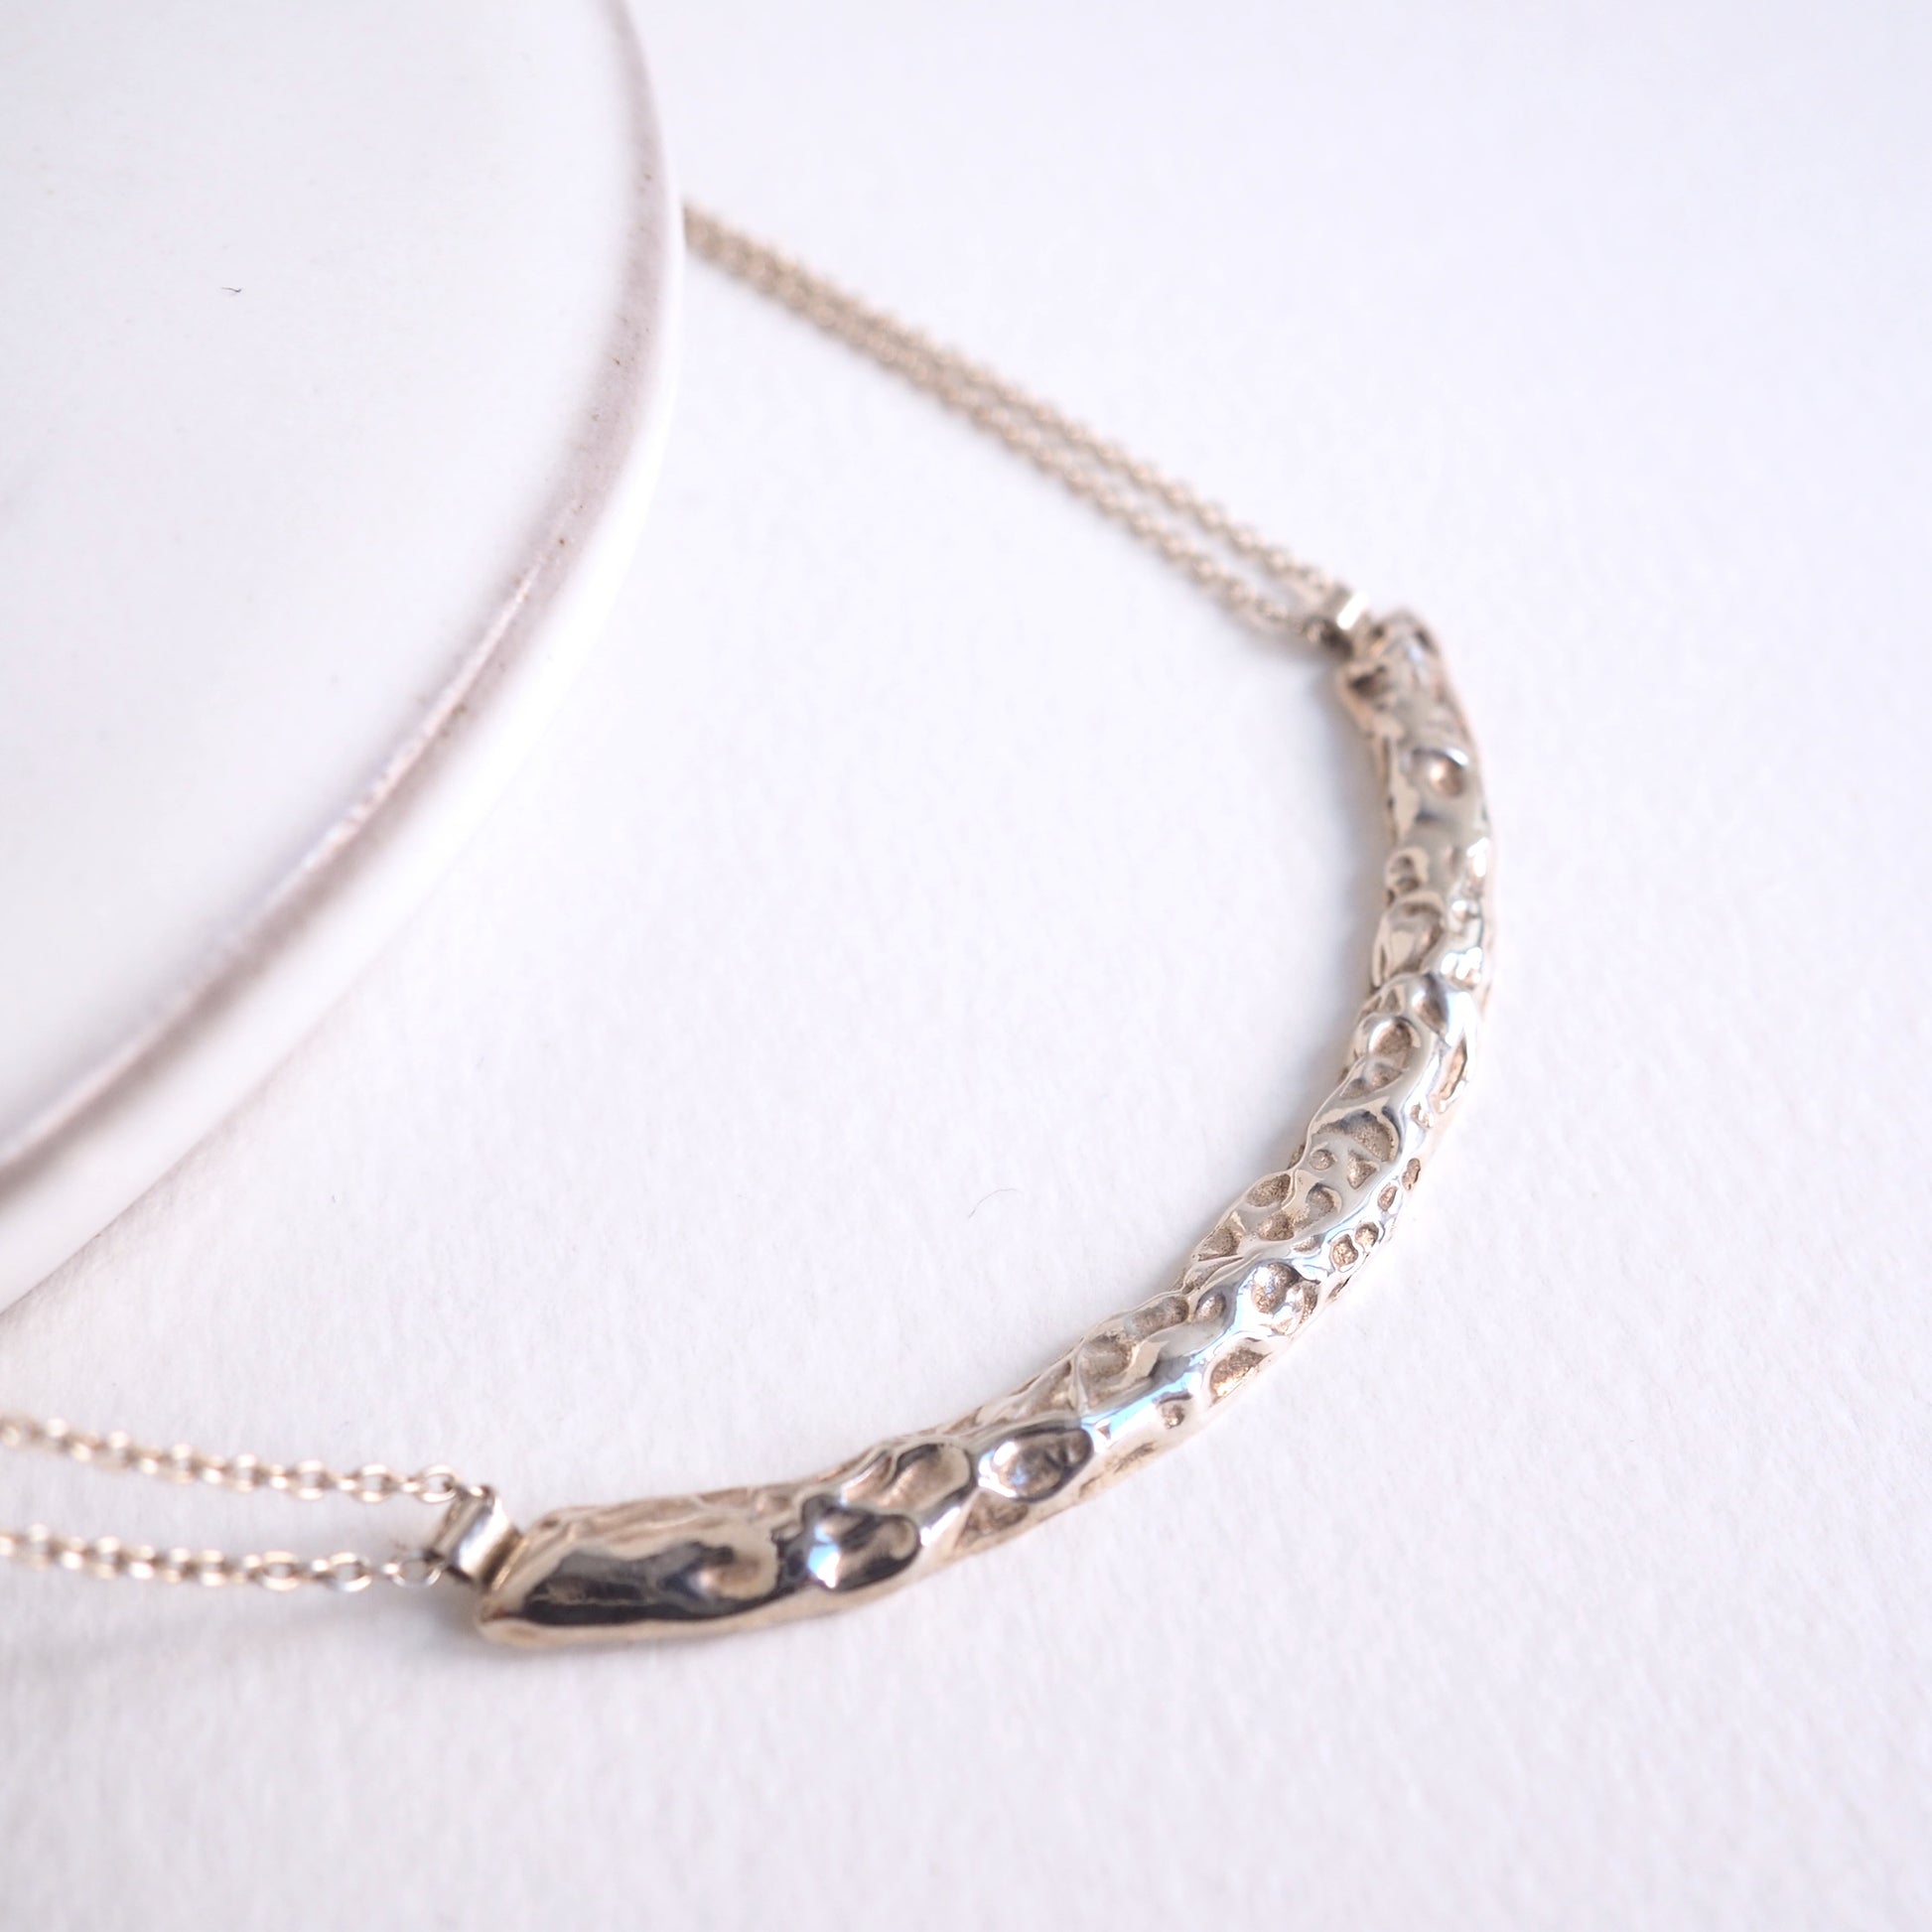 Marea Necklace sea Ocean Organic jewelry ring silver gold handmade handcrafted fashion custom bespoke